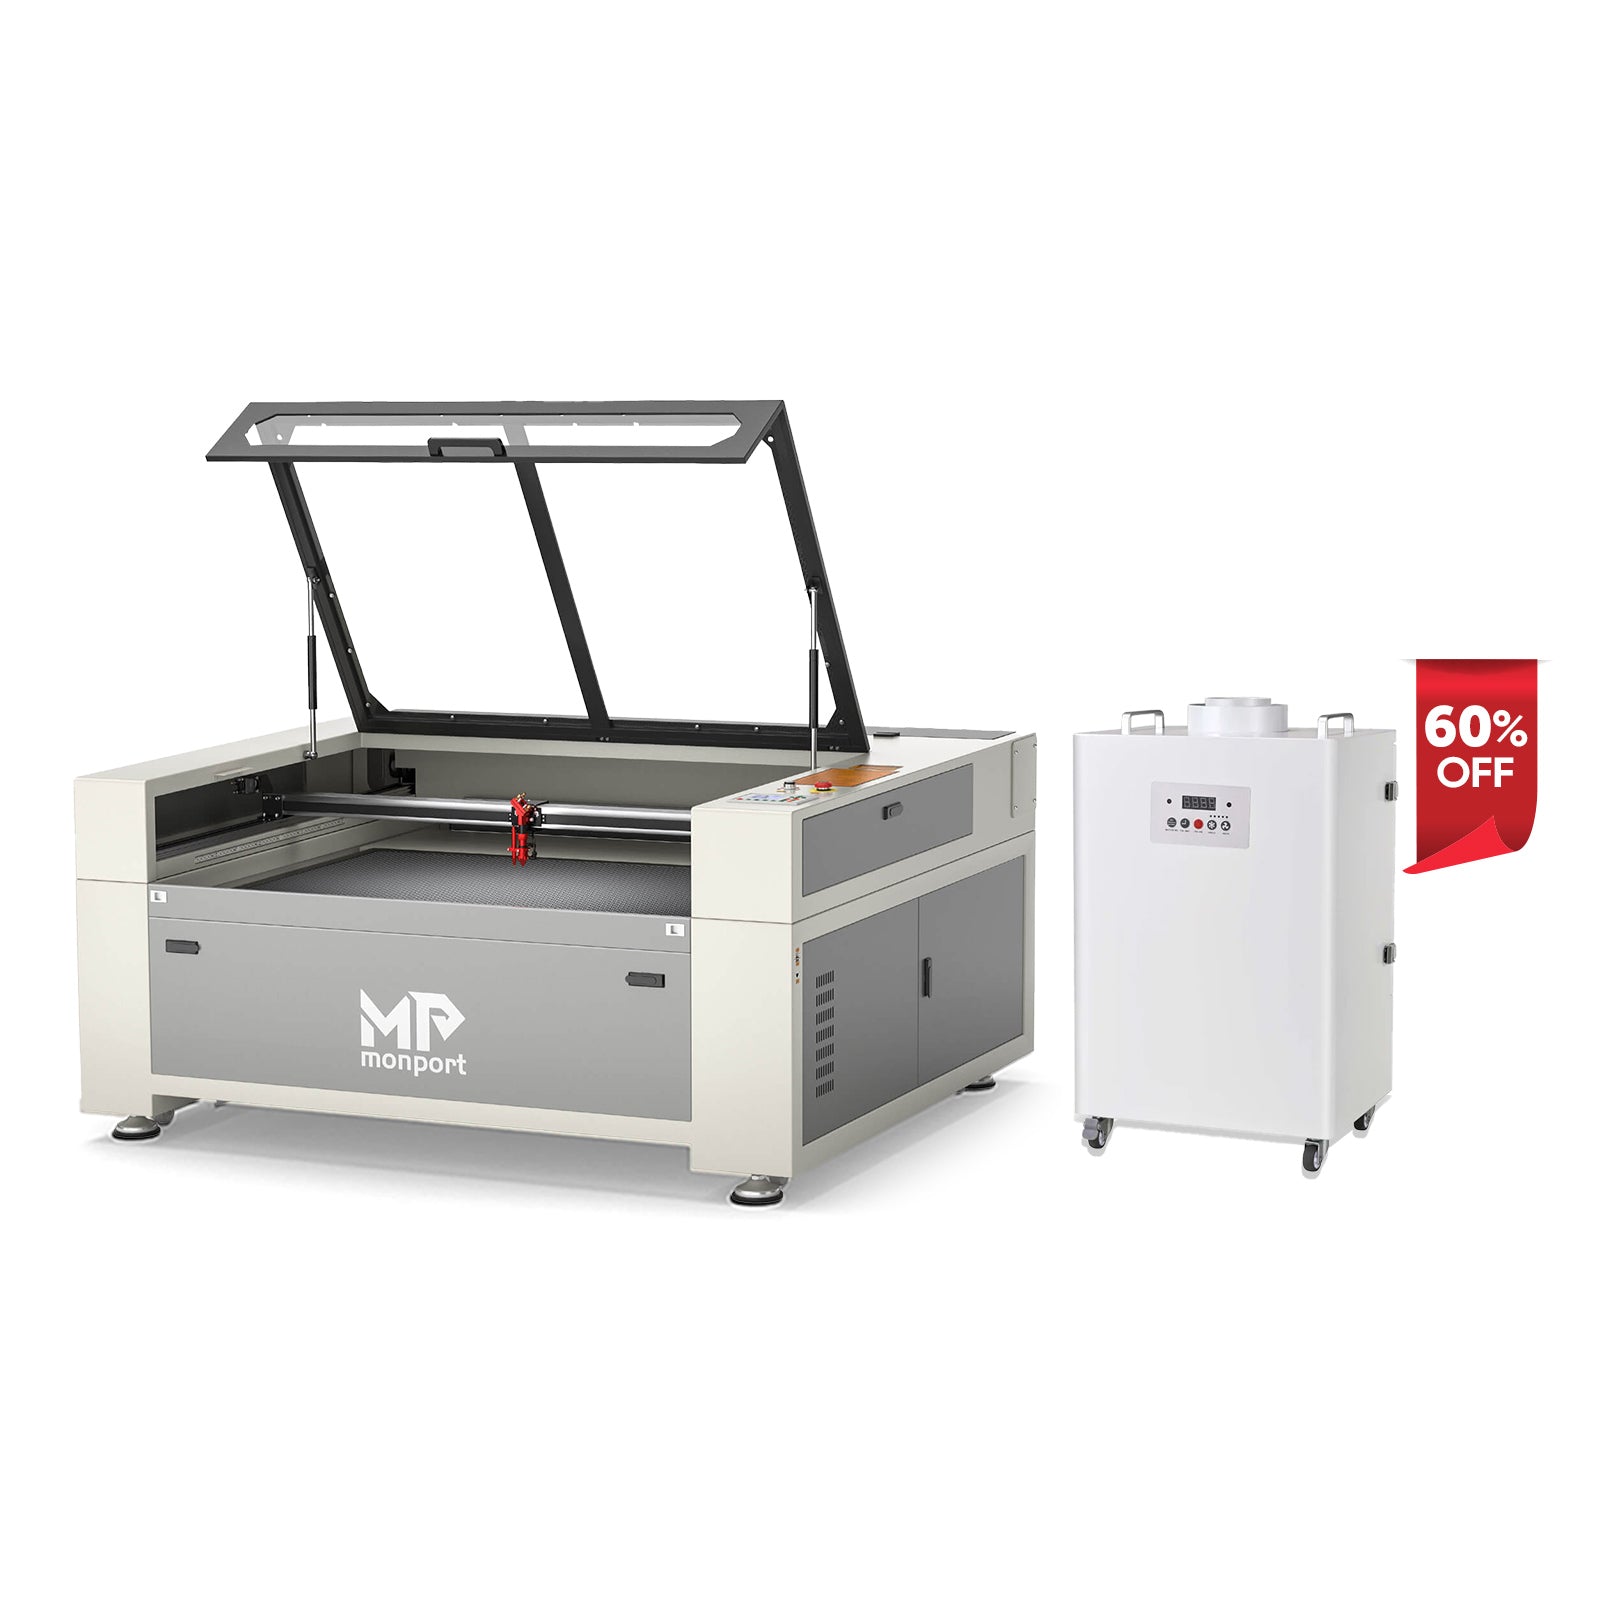 Special Offer | Monport 150W CO2 Laser Engraver & Cutter (64